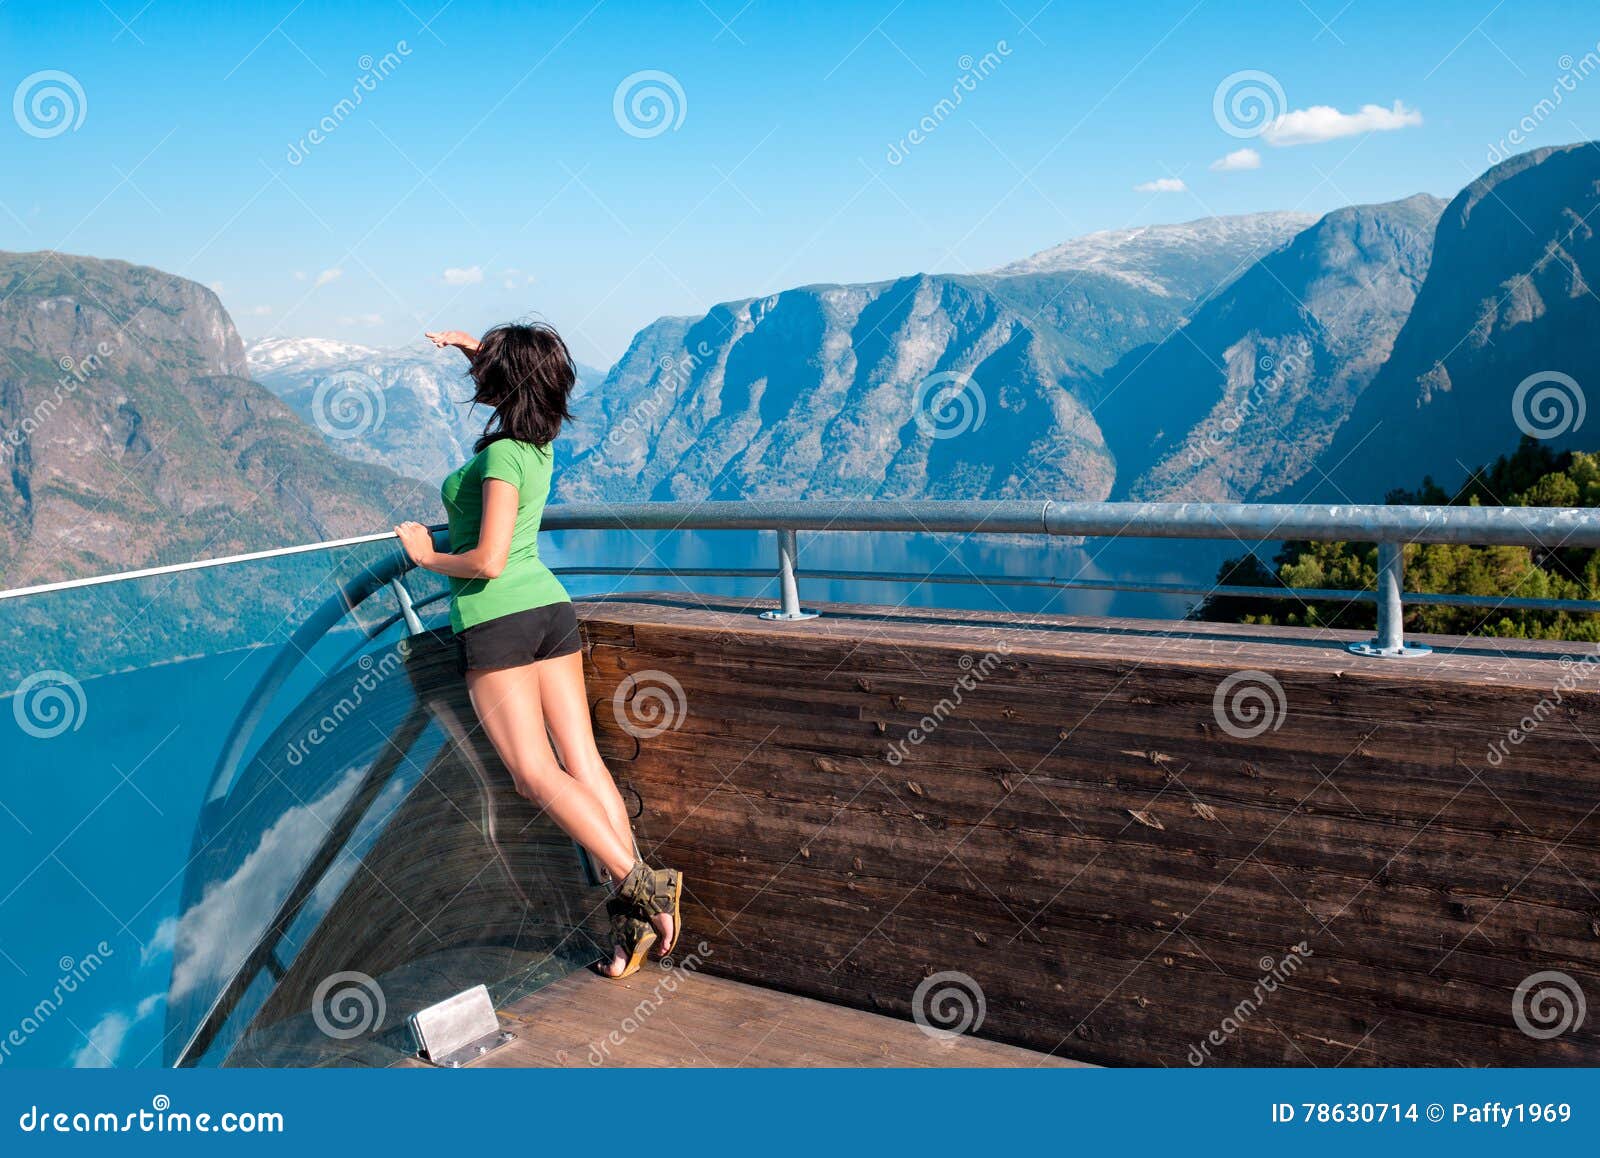 woman enjoying scenics from stegastein viewpoint